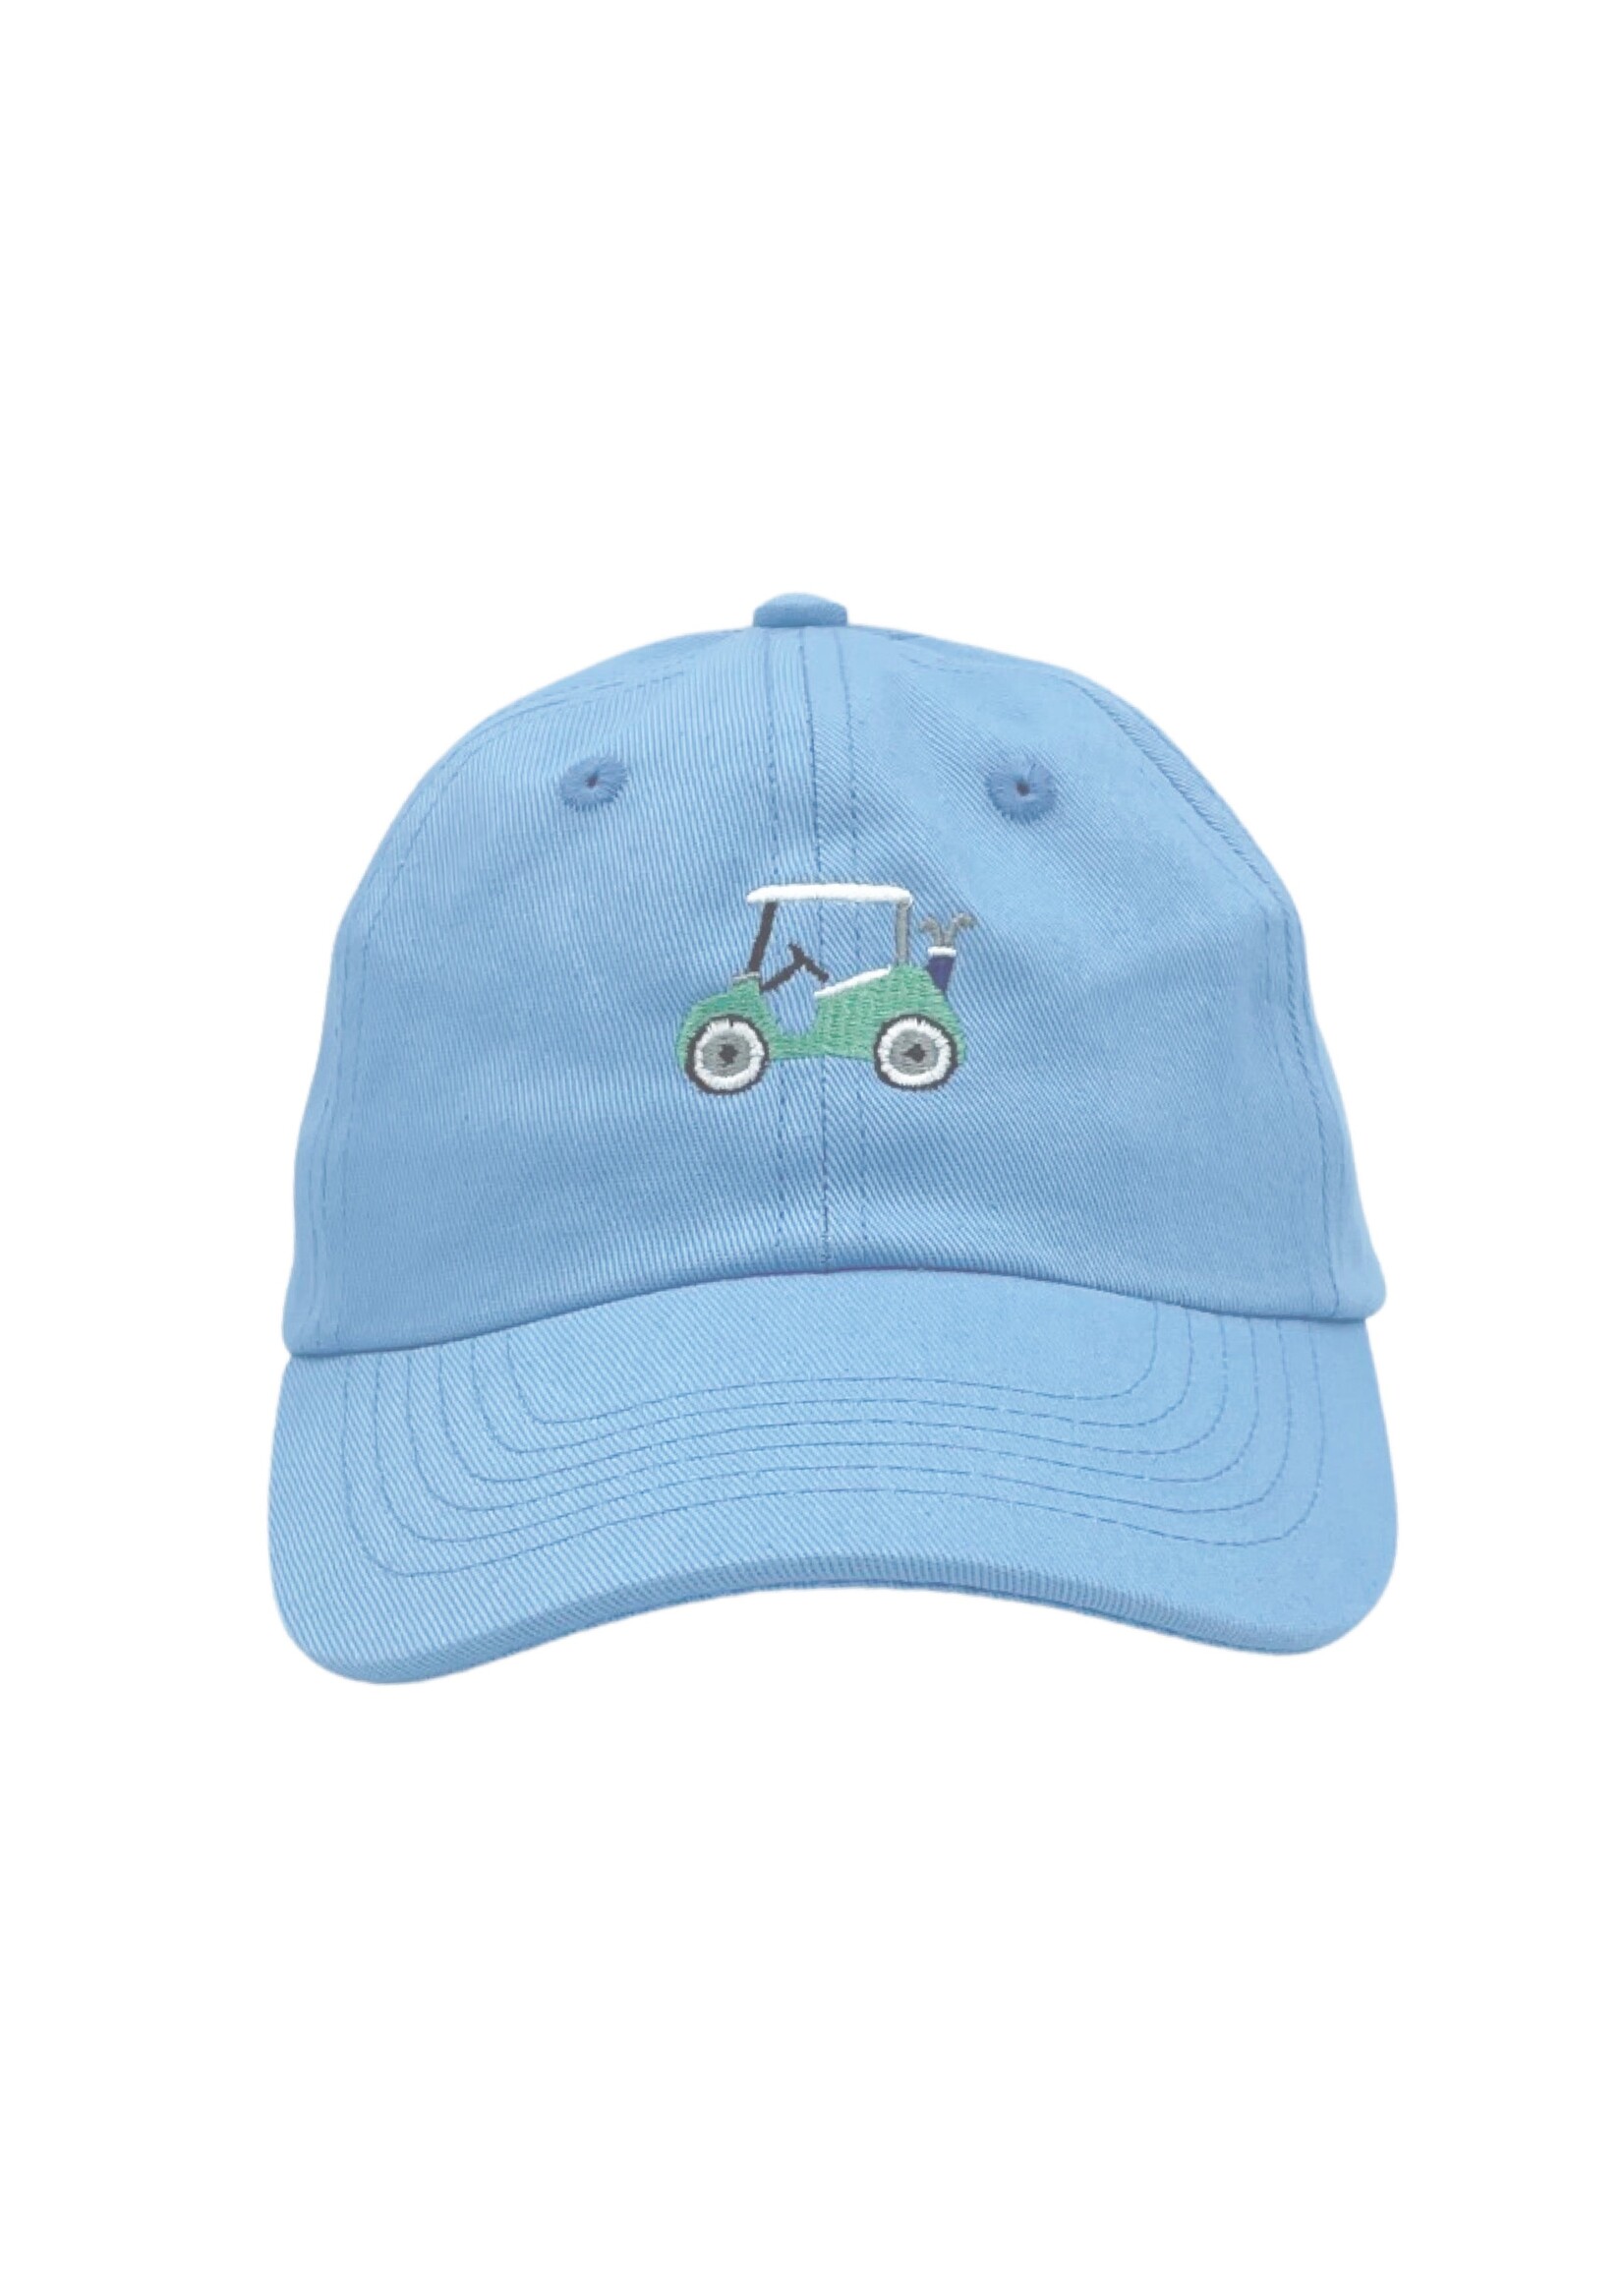 Bits & Bows Bits & Bows Boys Golf Cart Hat -Birdie Blue